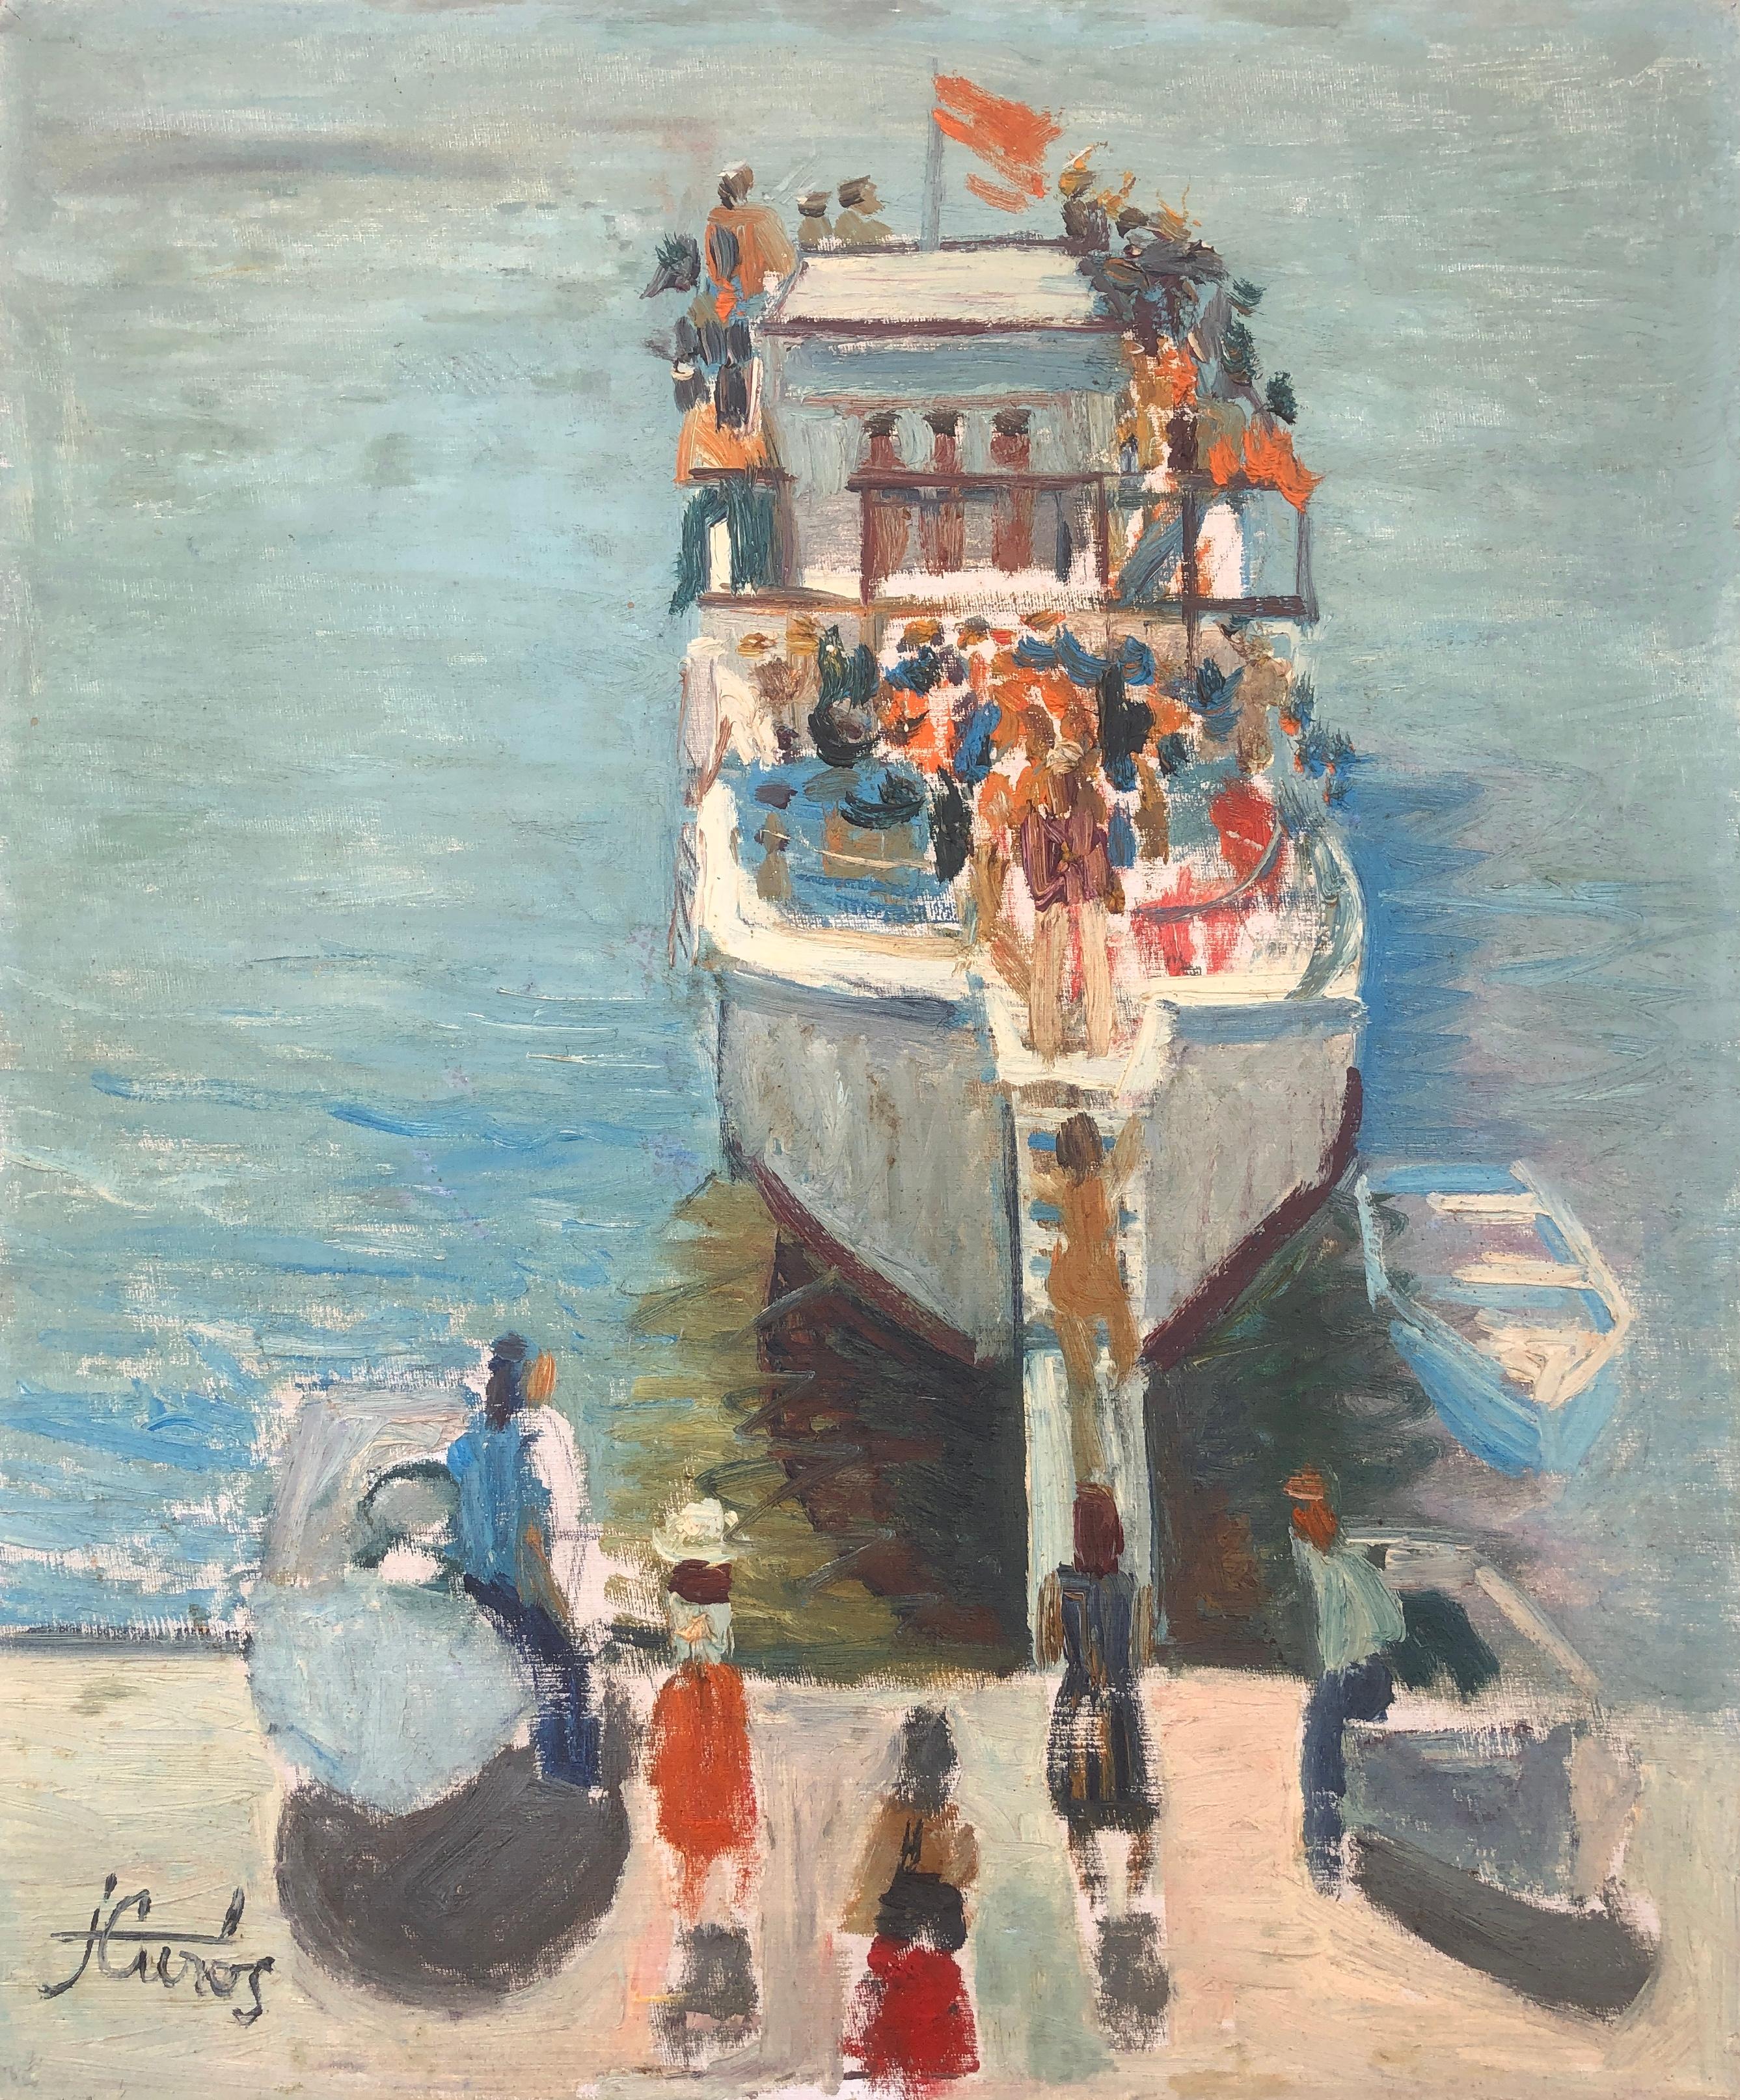 Jordi Curos Landscape Painting - The ship oil painting fauvist spanish seascape